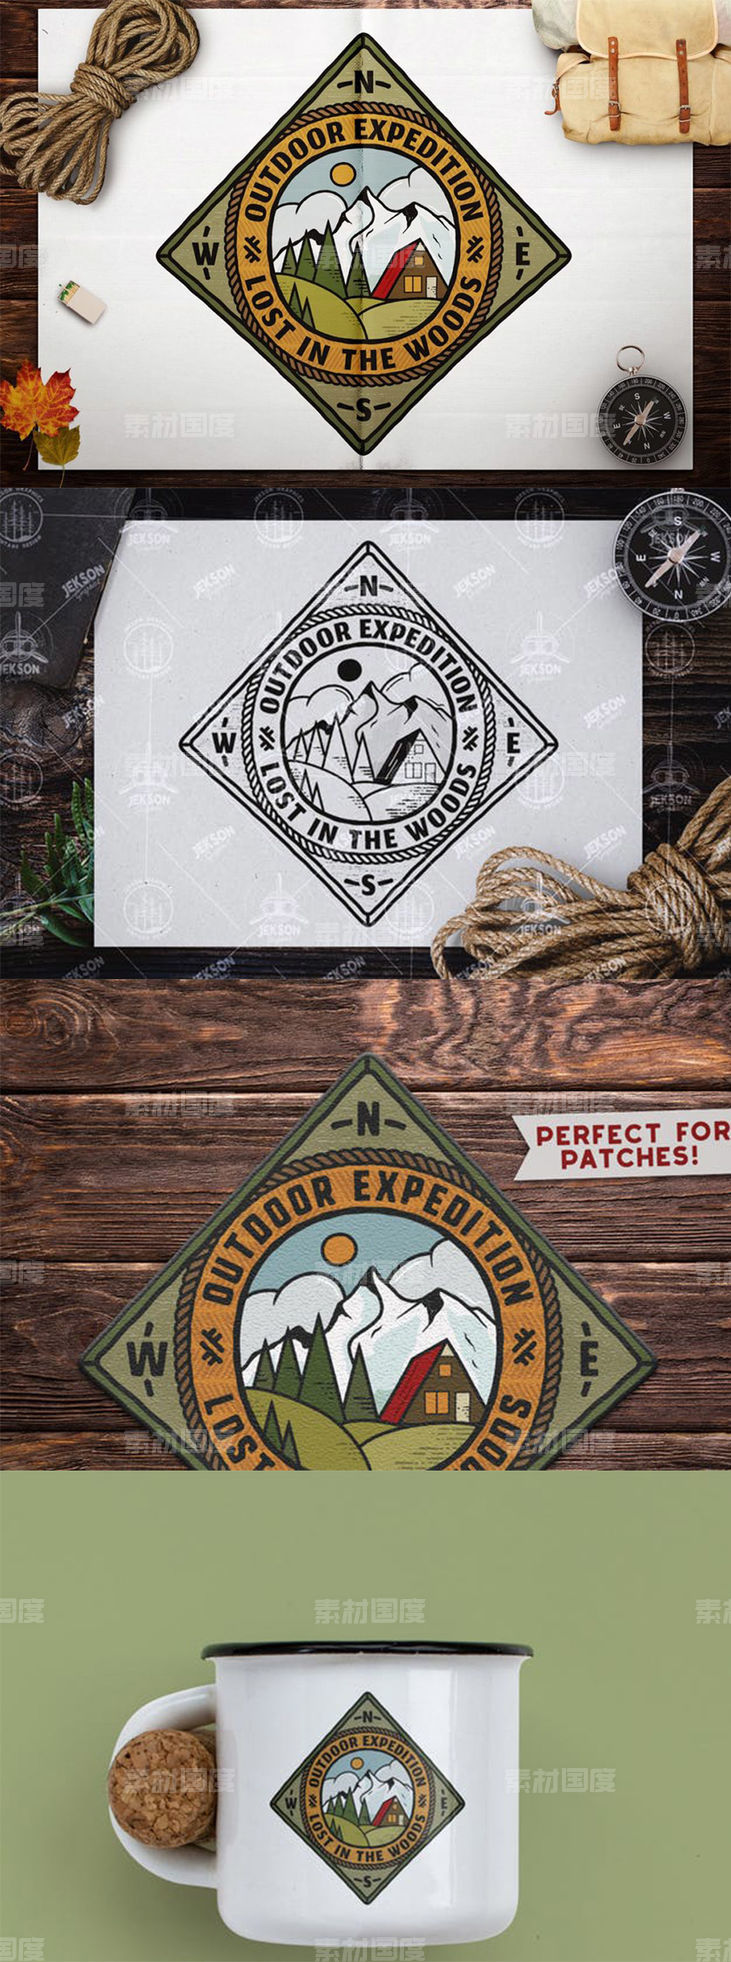 复古风格户外运动Logo模板v2 Retro Travel Emblem  Vintage Camping Logo  Patch